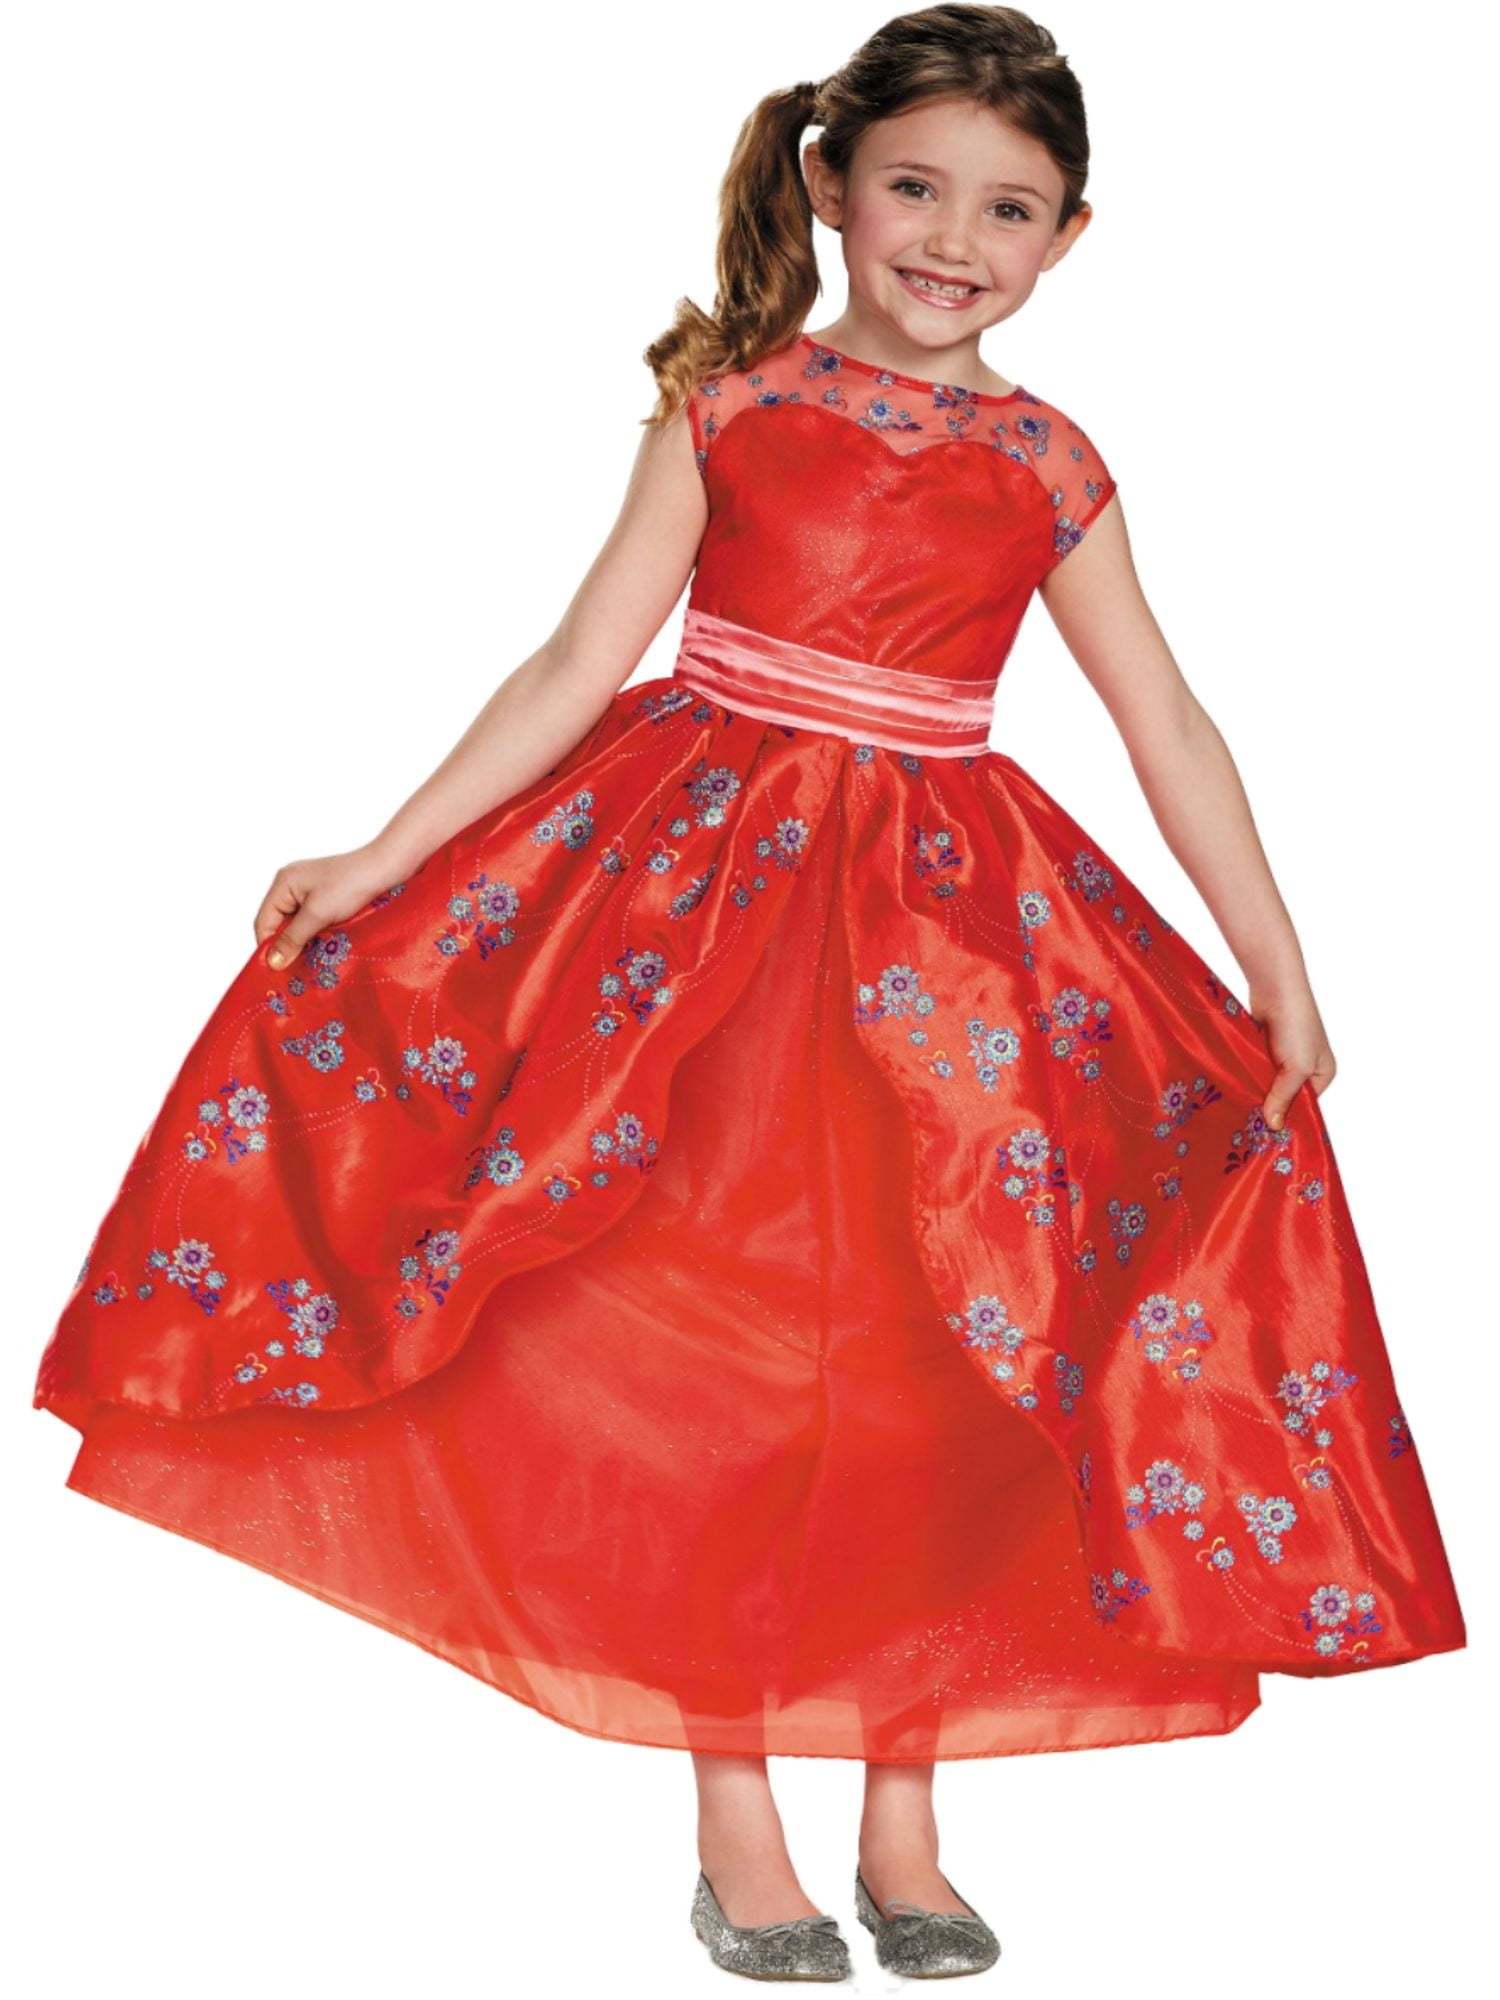 Disney Store Exclusive Elena Of Avalor Red Dress Costume Halloween •NEW•